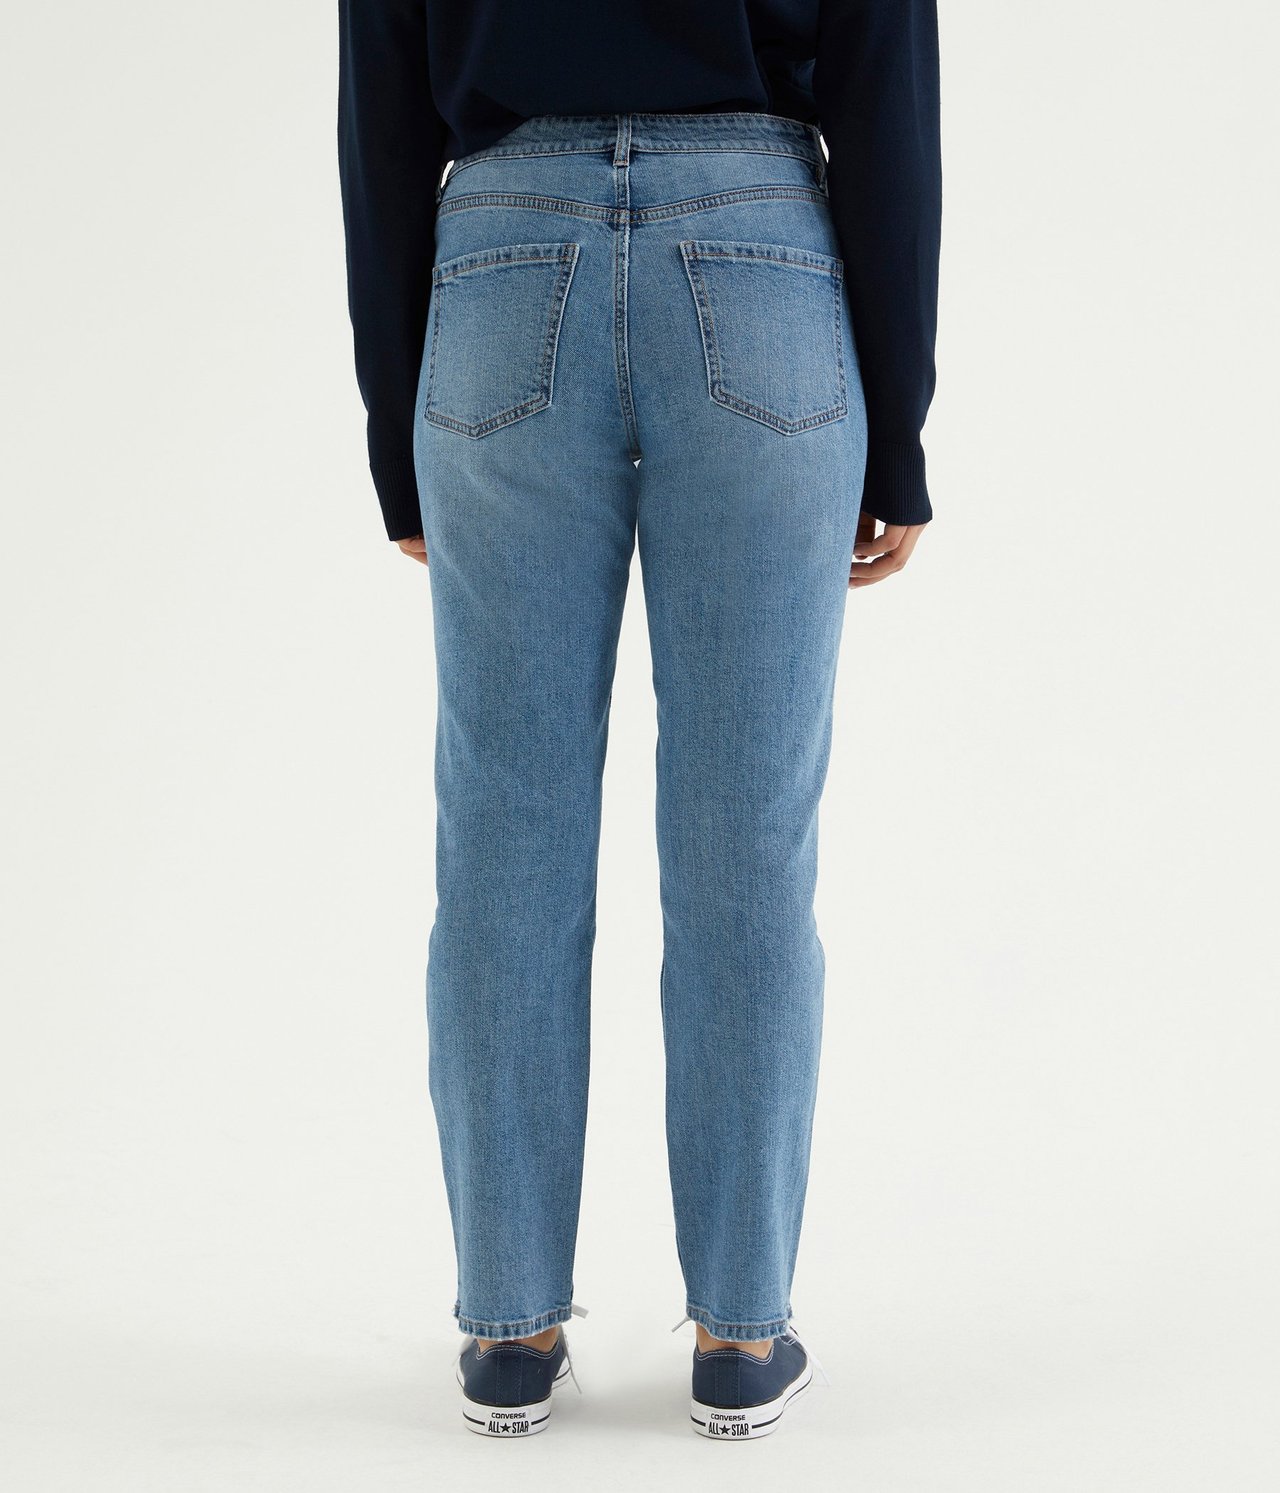 Jeans high waist tapered Lys denim - 34 - 5